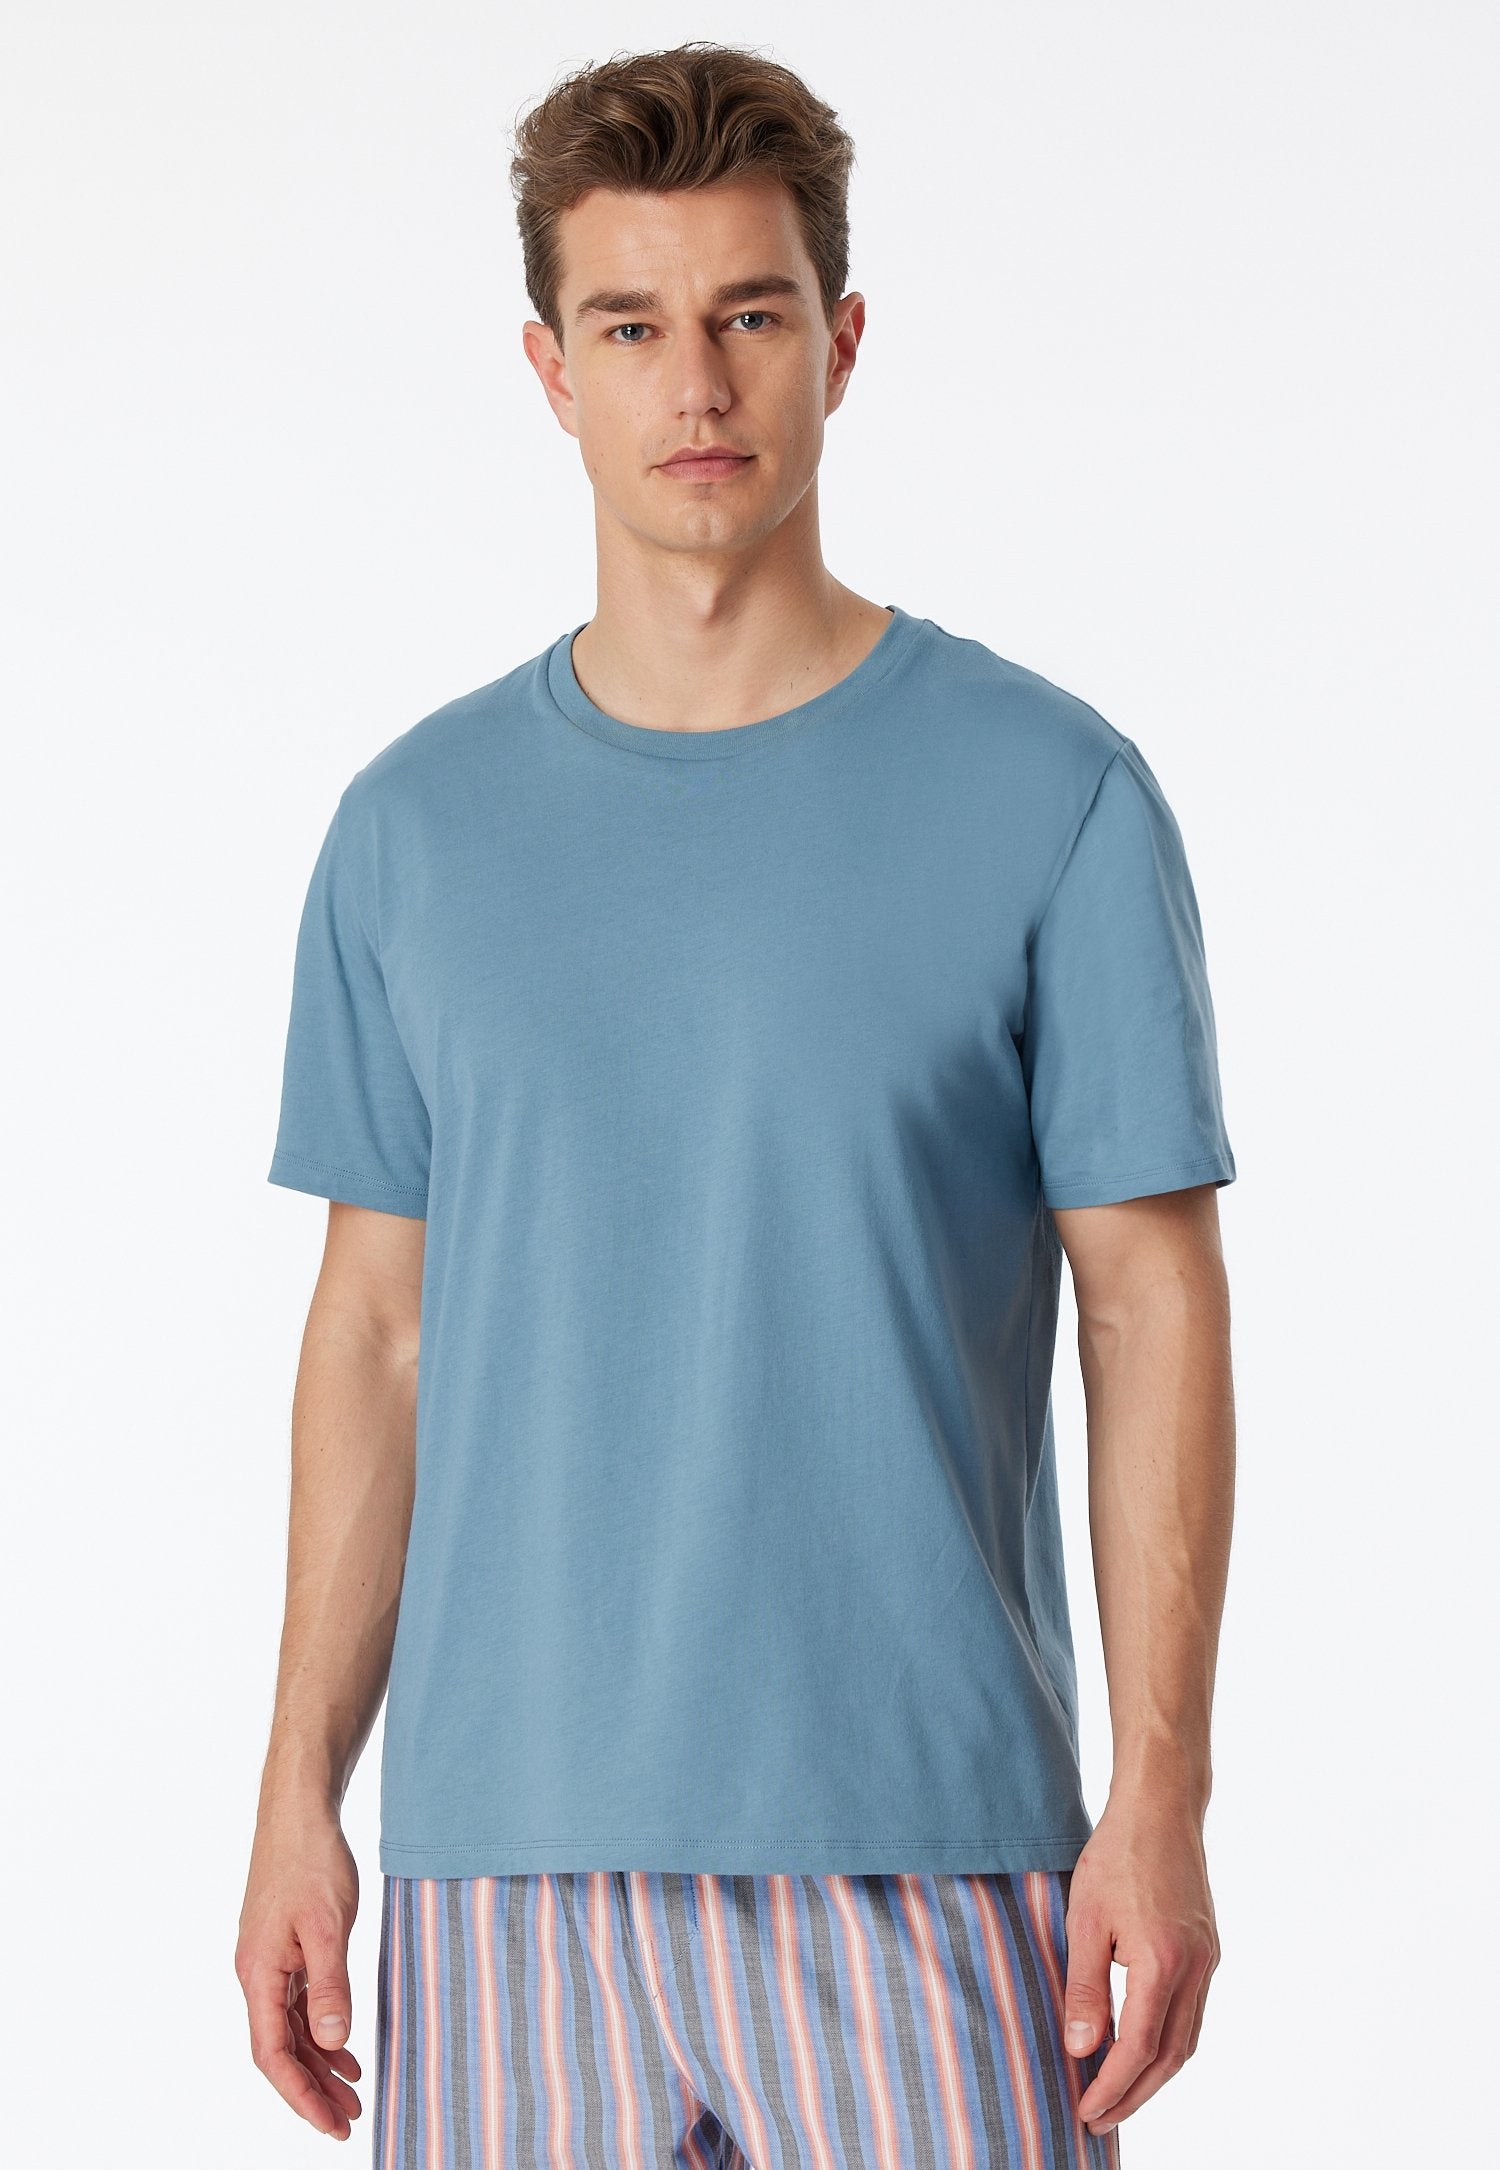 T-shirt Rundhals (Blaugrau)